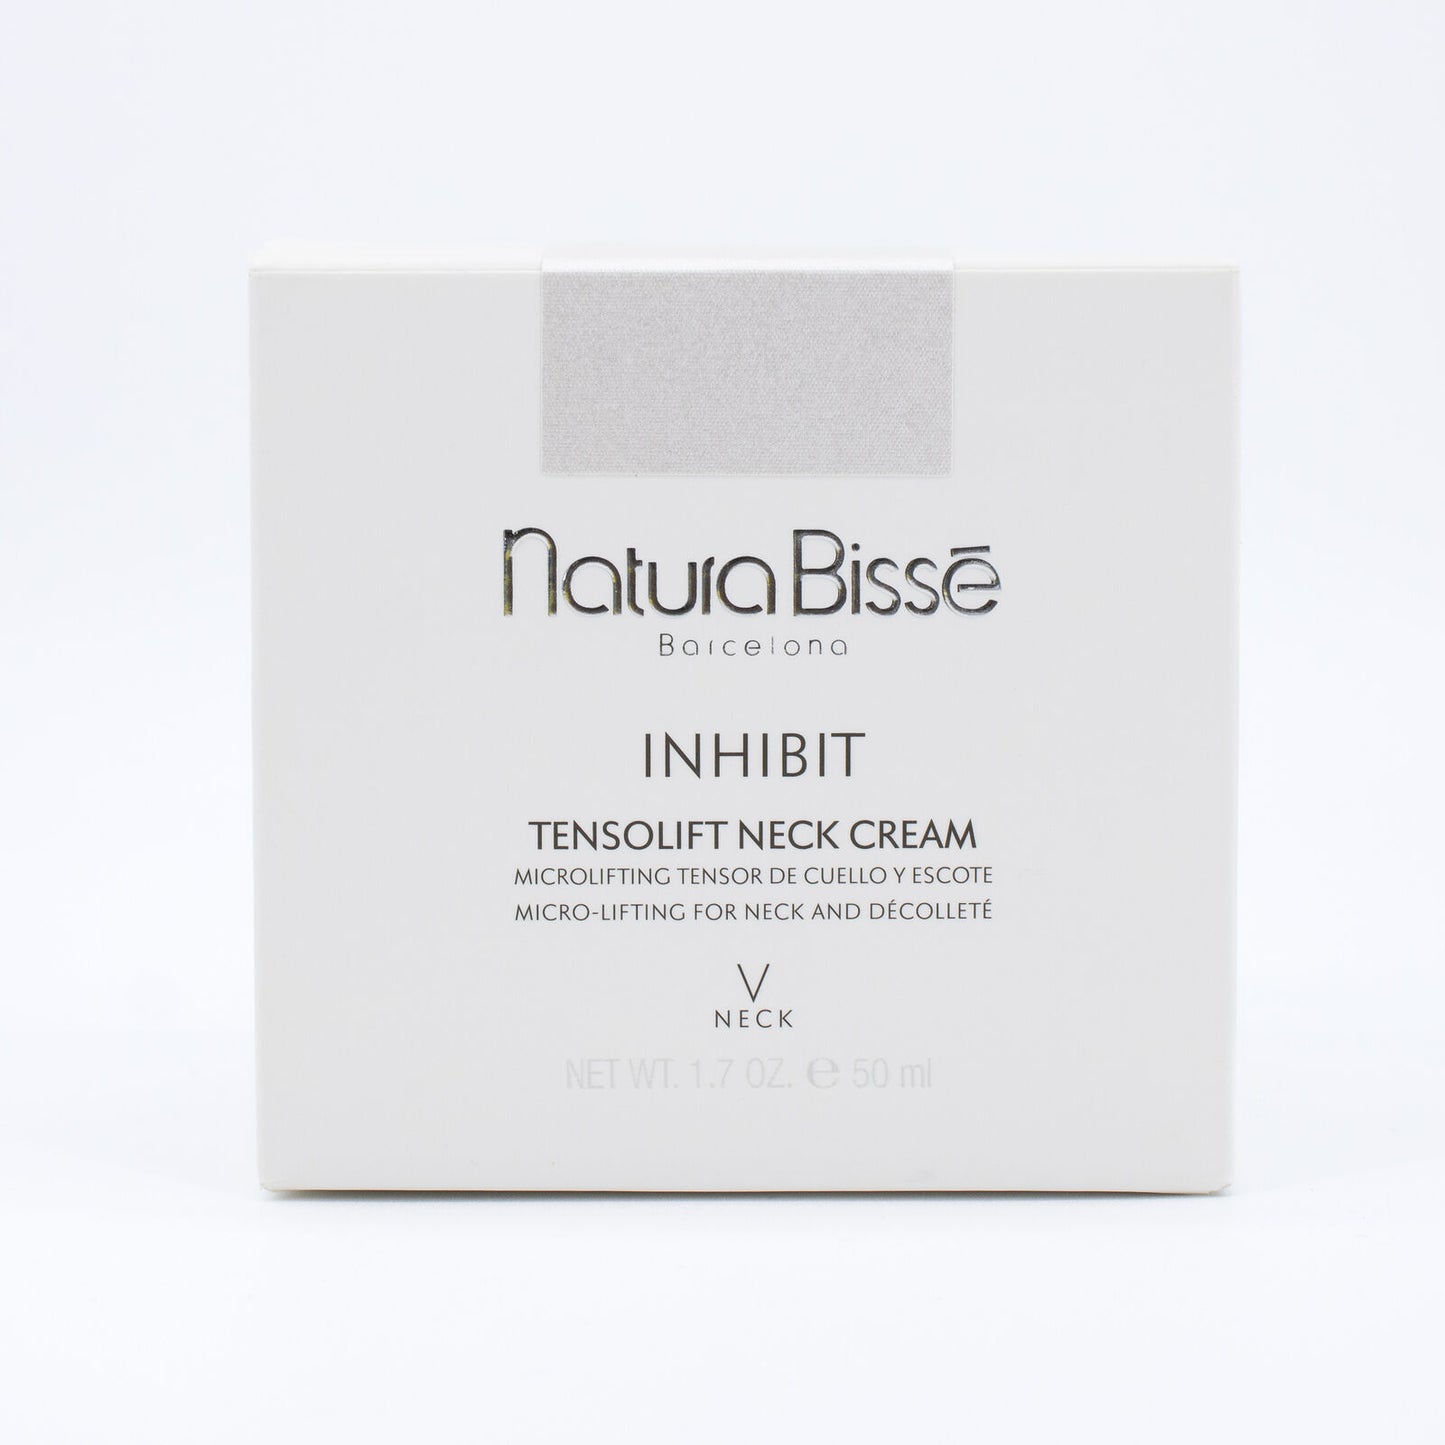 NaturaBisse Inhibit Tensolift Neck Cream 1.7oz - New